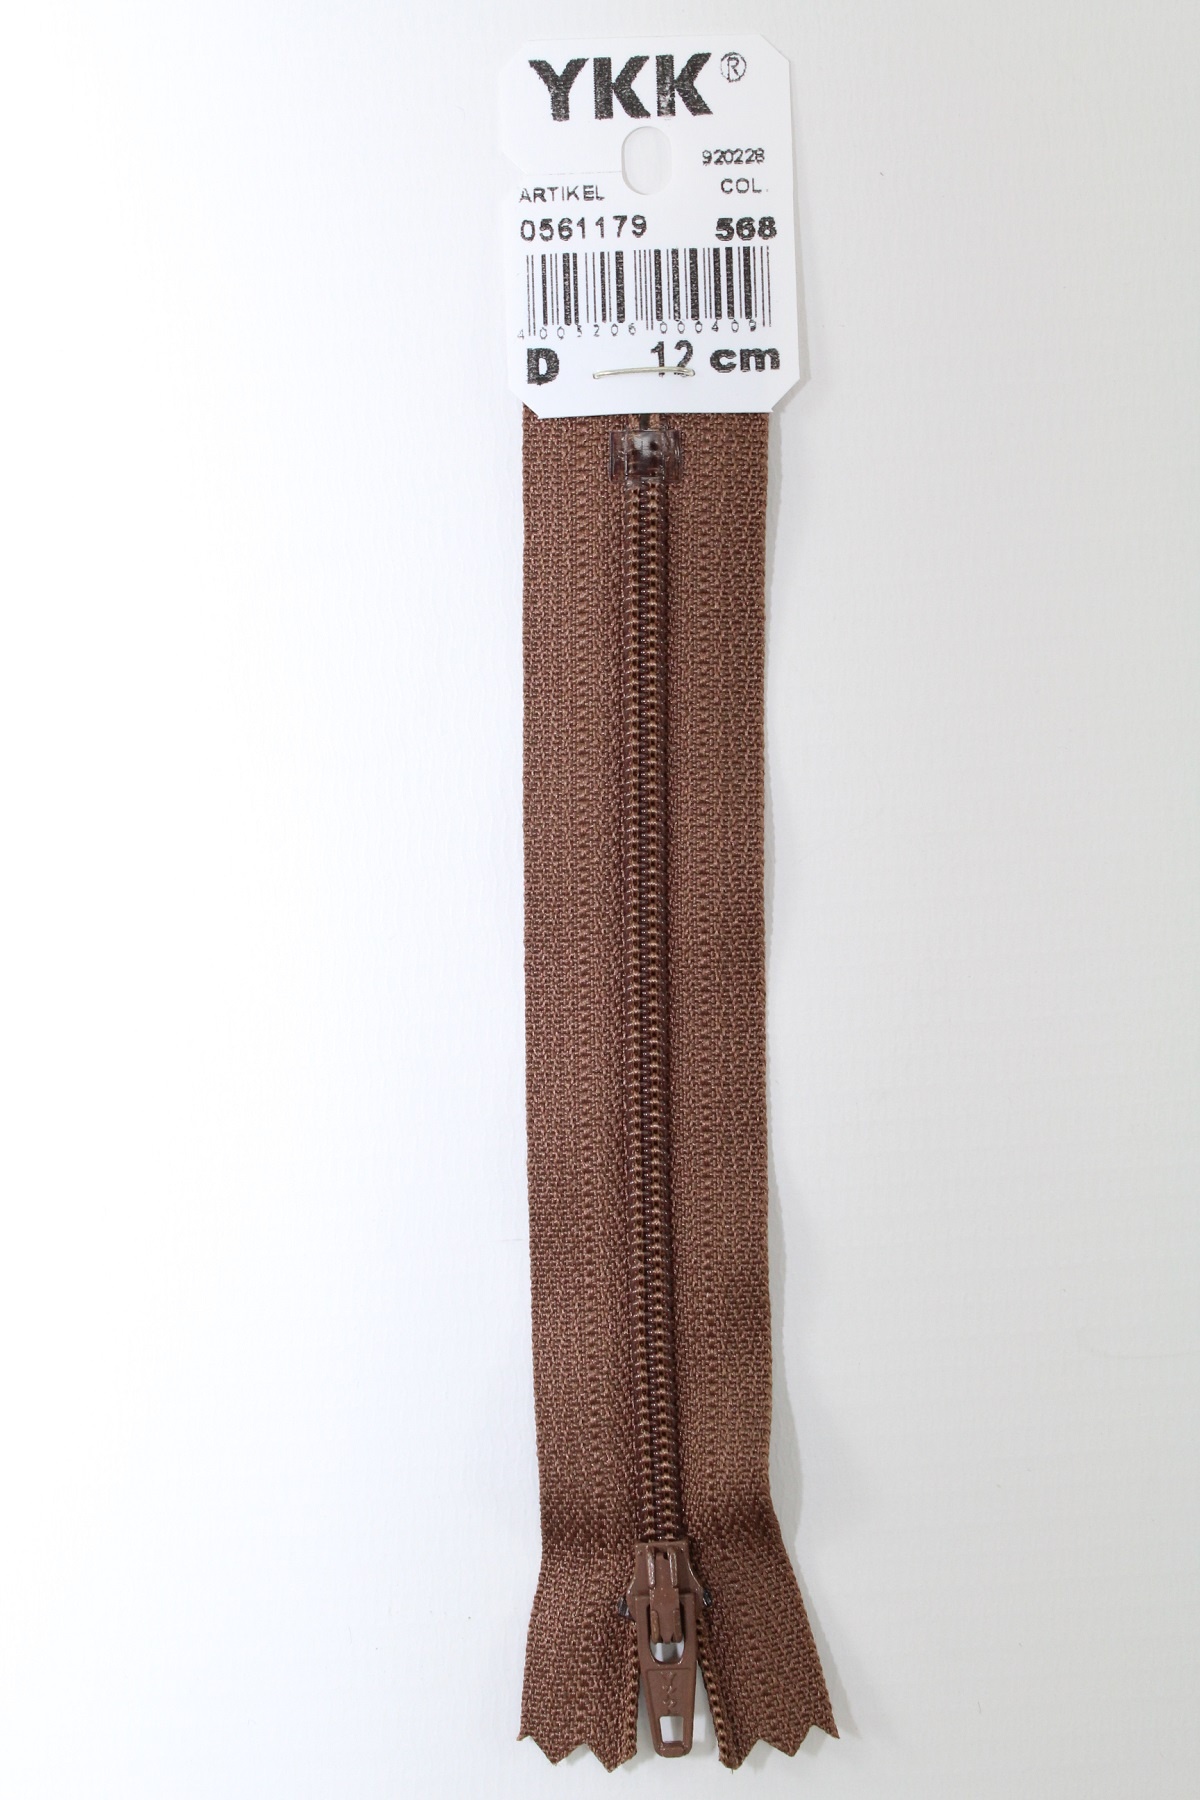 YKK-Reissverschluss 12cm-60cm, nicht teilbar, tabak